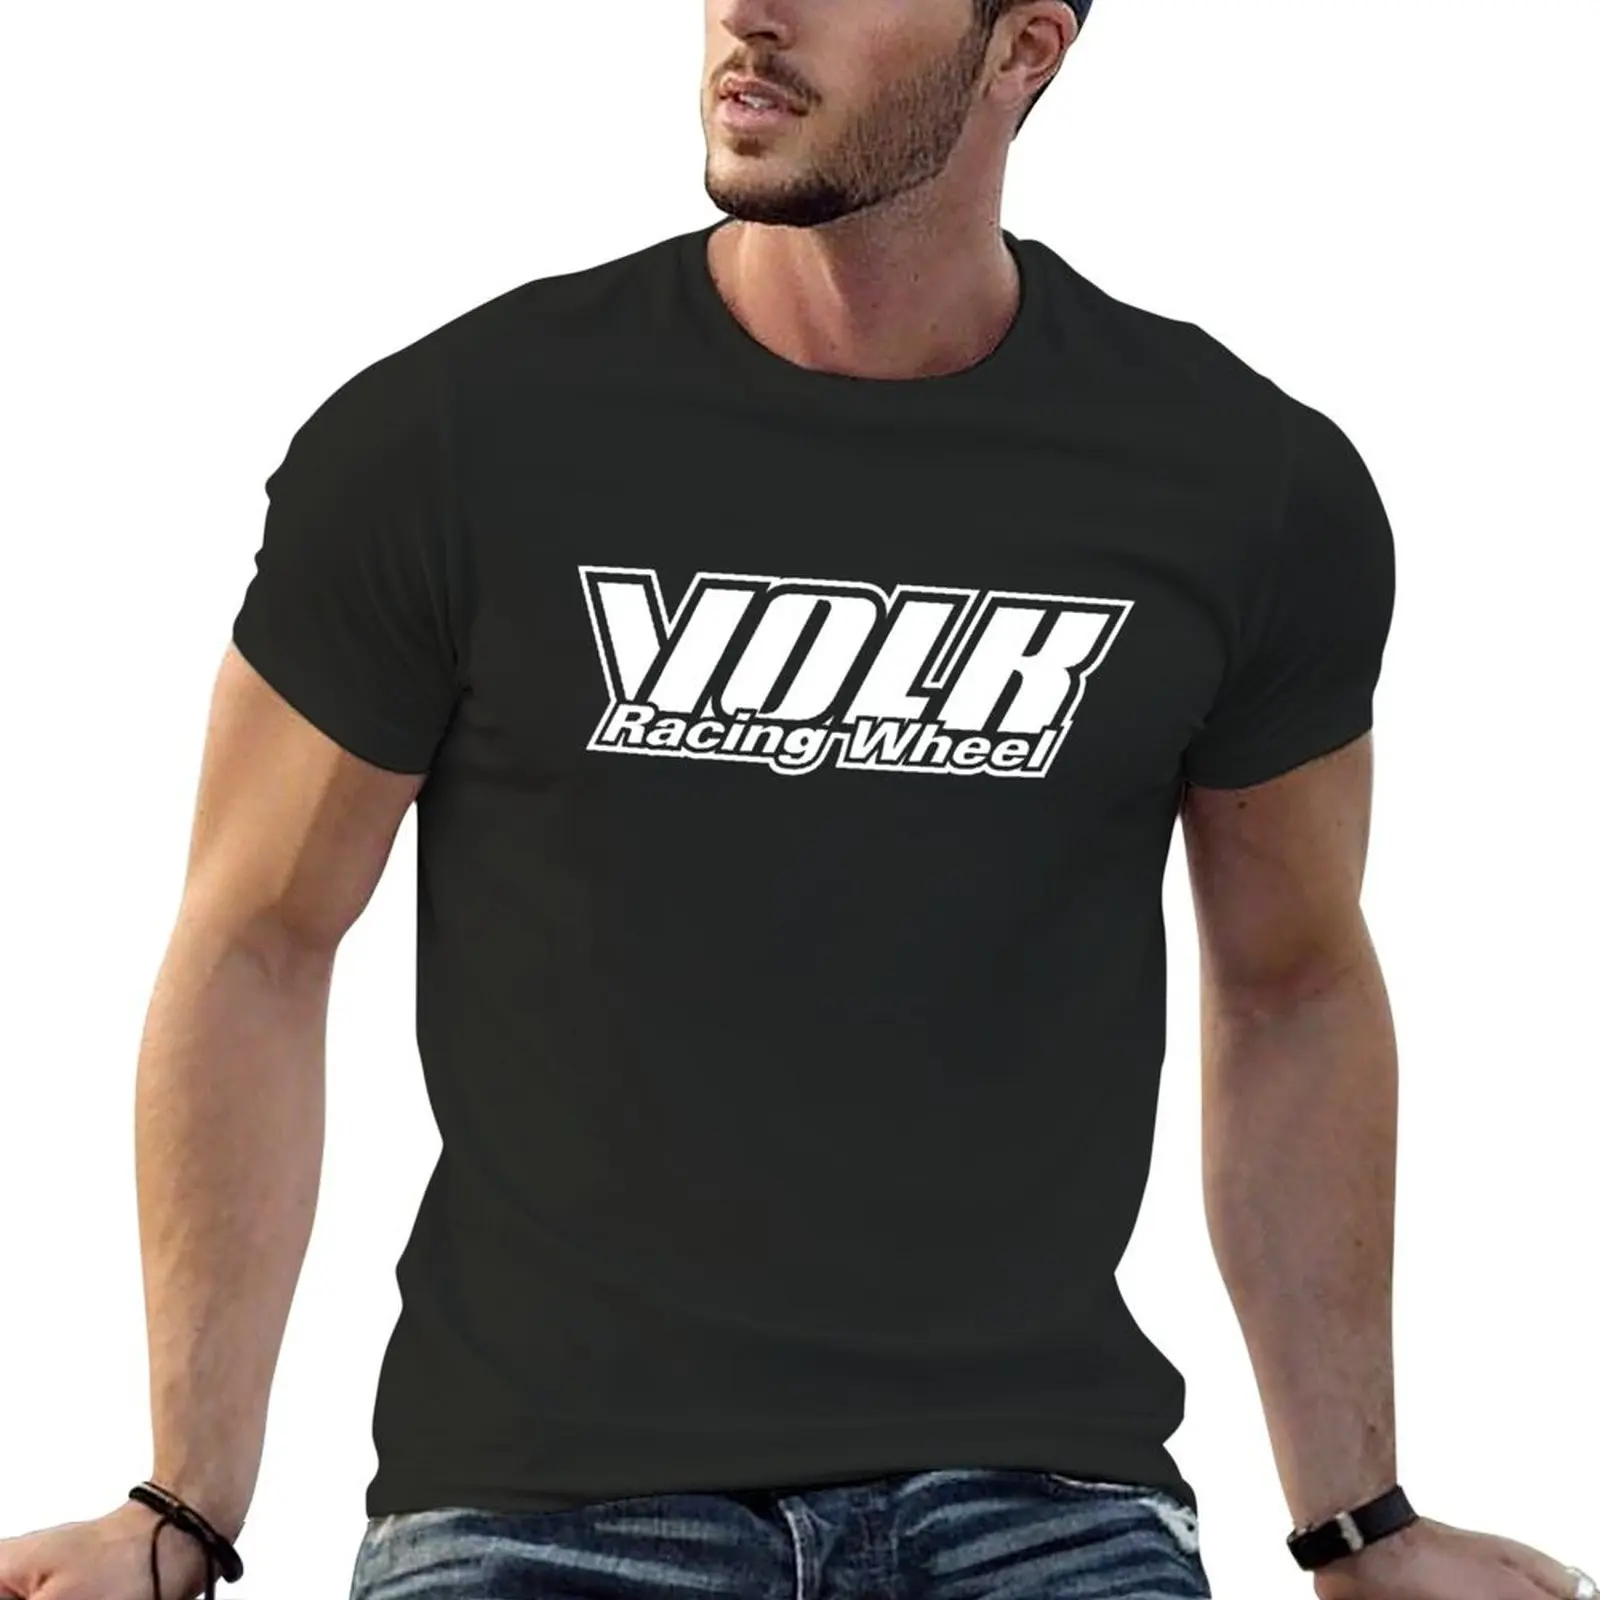 

Volk Racing White T-shirt quick drying plus sizes customizeds animal prinfor boys mens cotton t shirts